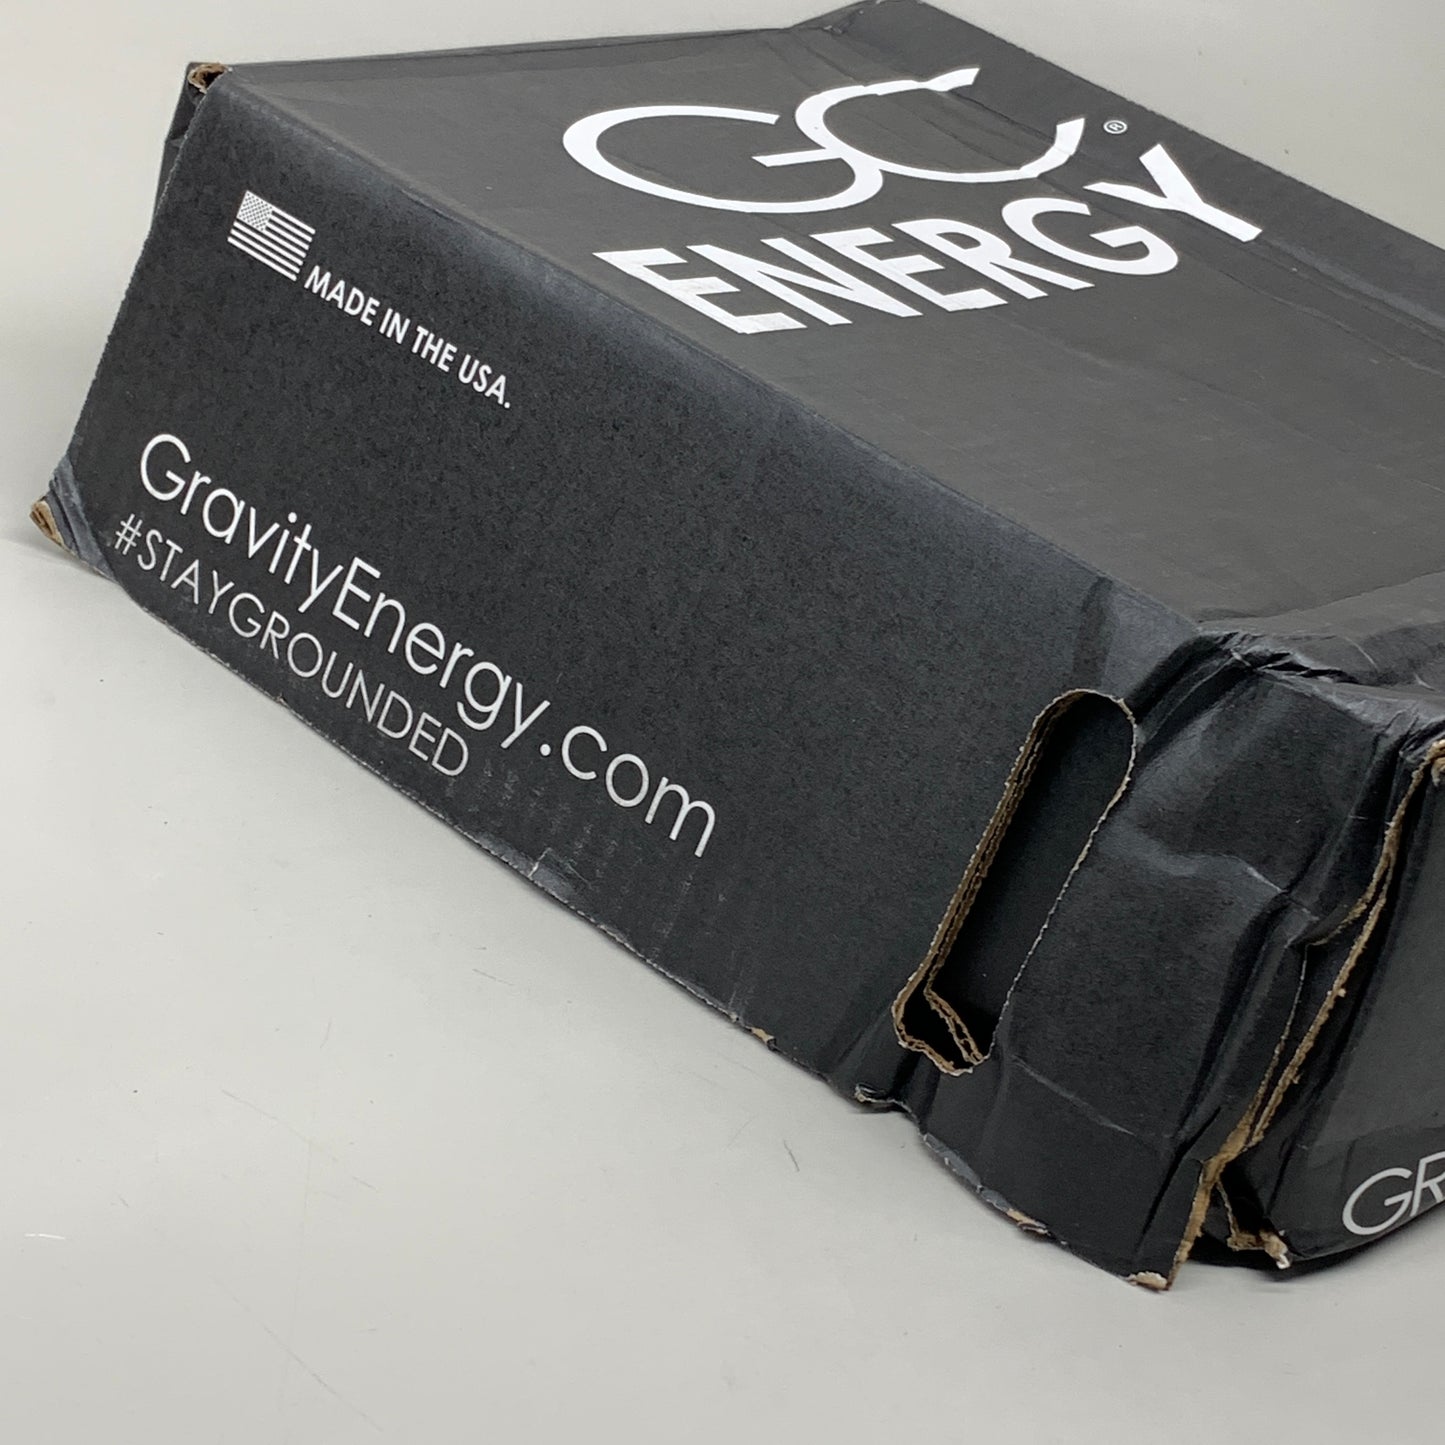 GRAVITY ENERGY Gravity Energy Beyond Original Limited Edition 5+1 Ratio 3 Gallons